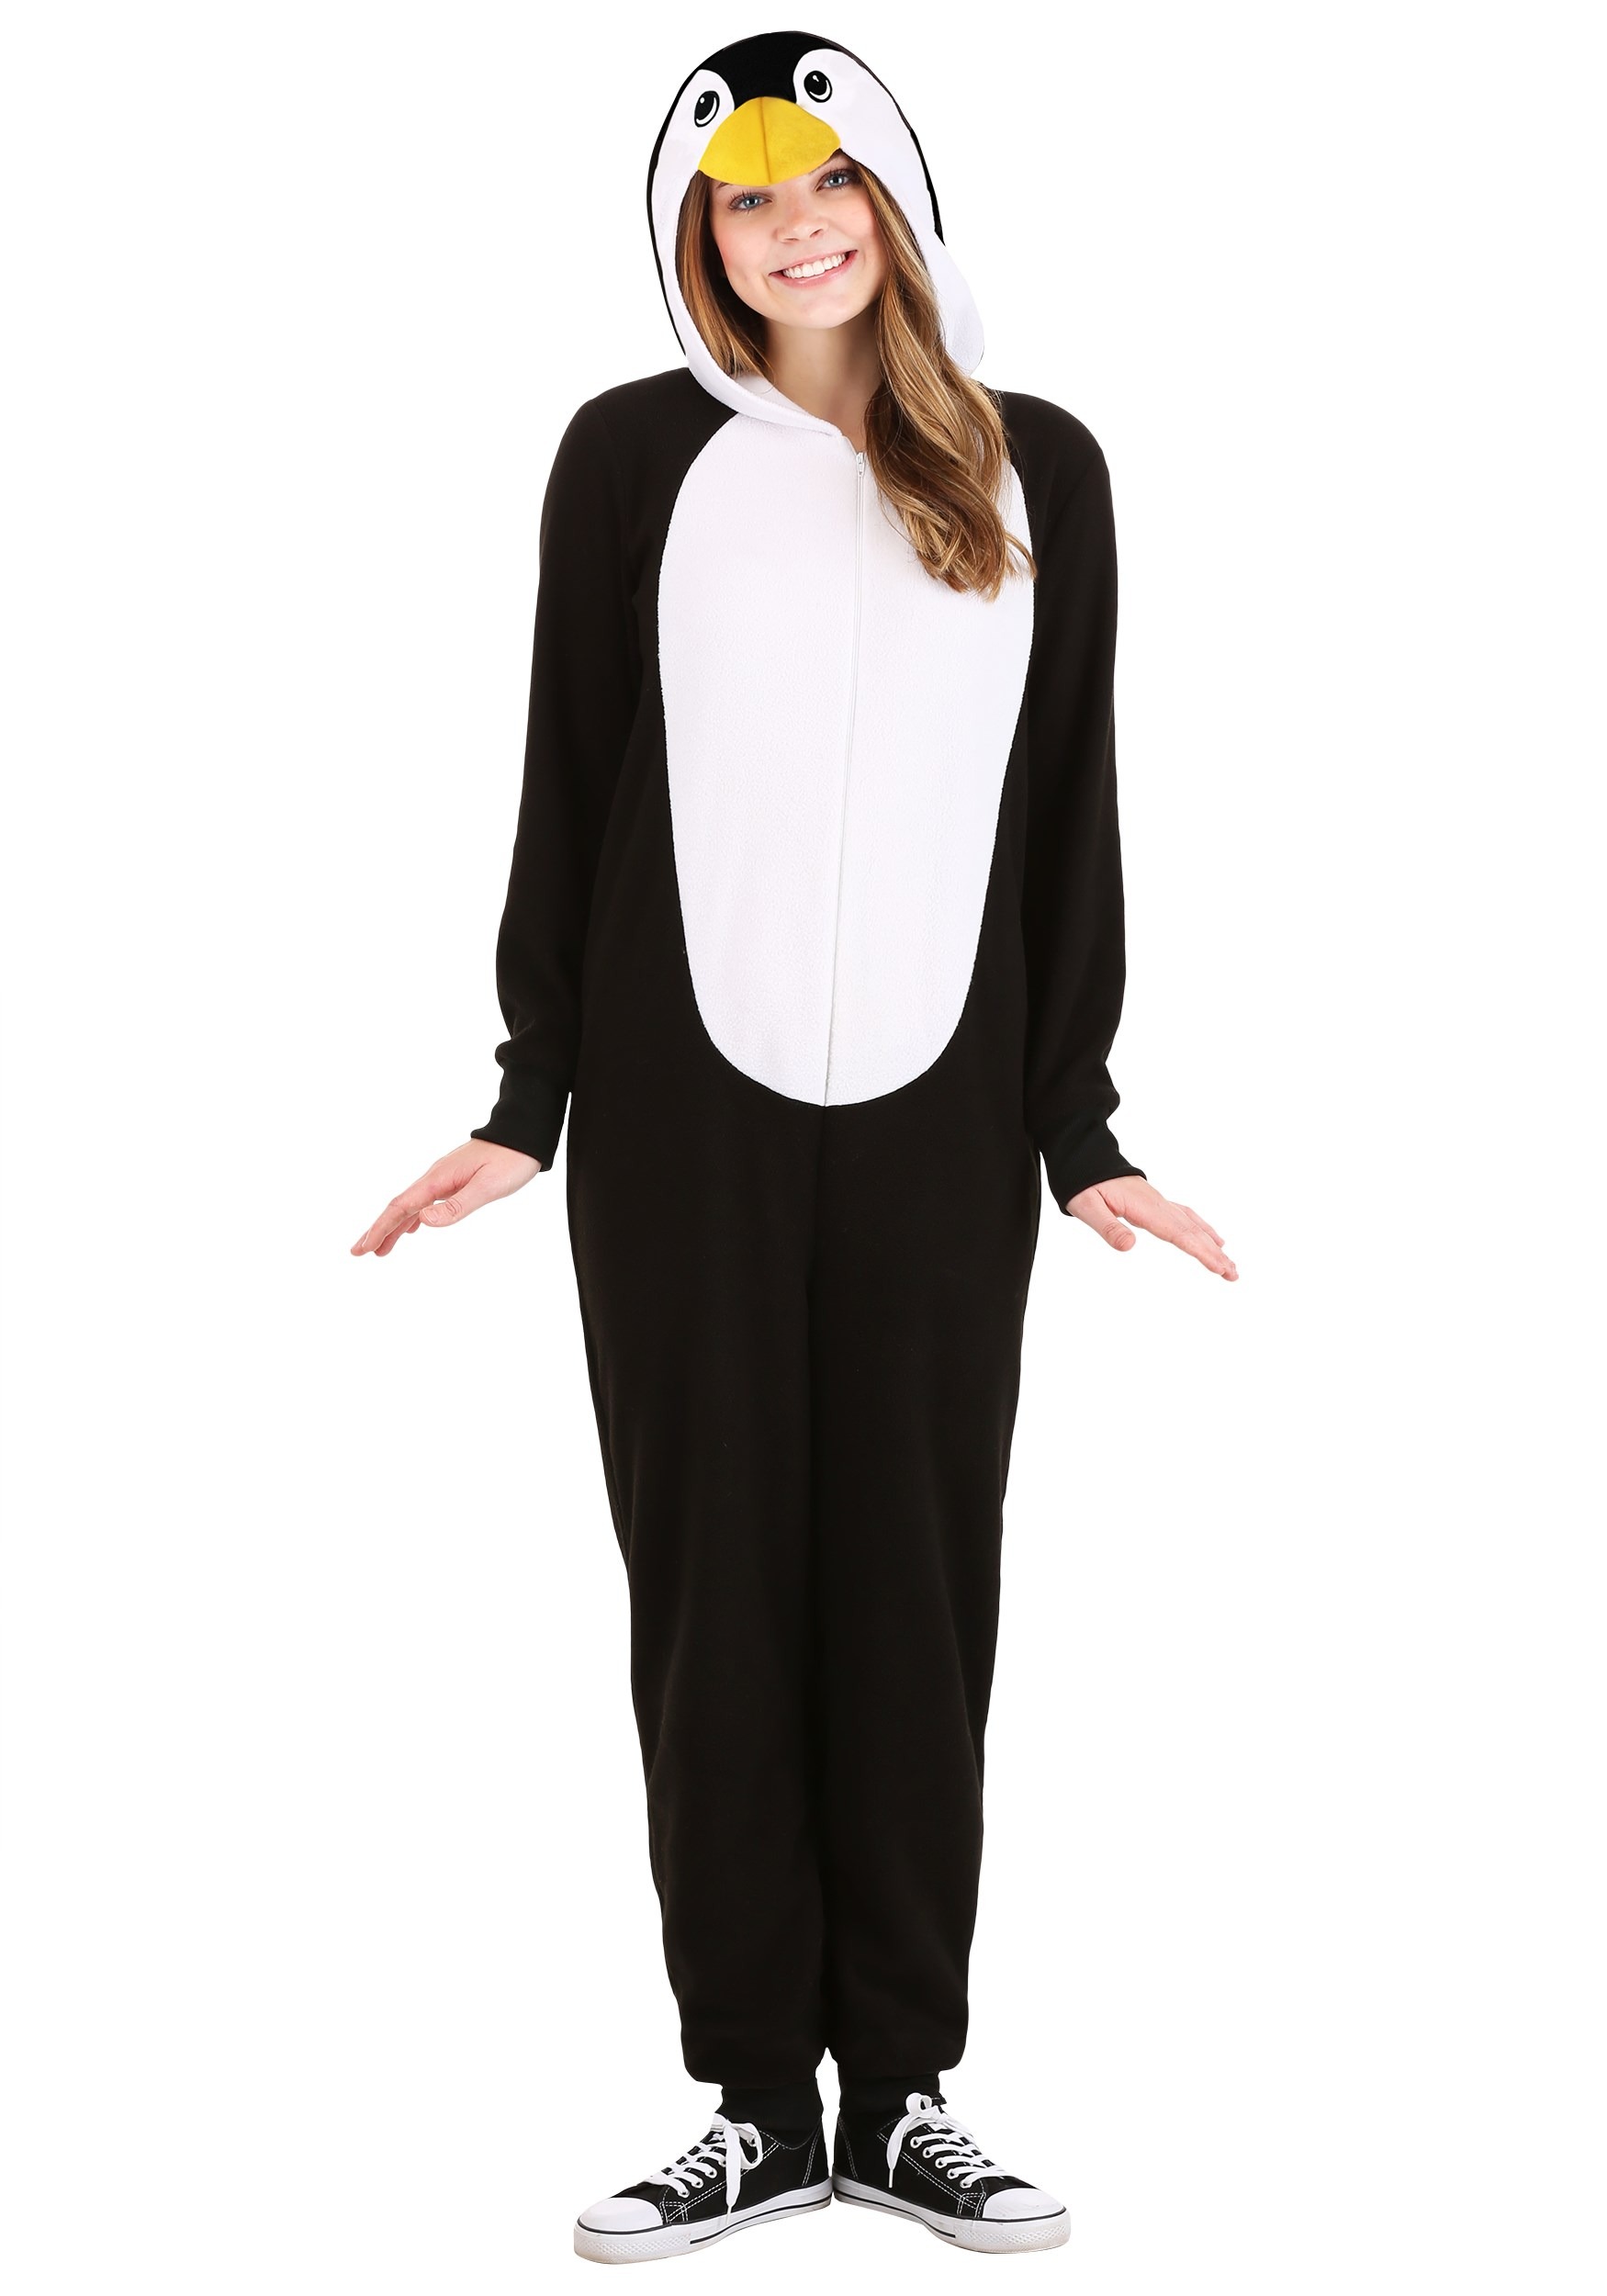 female penguin cosplay